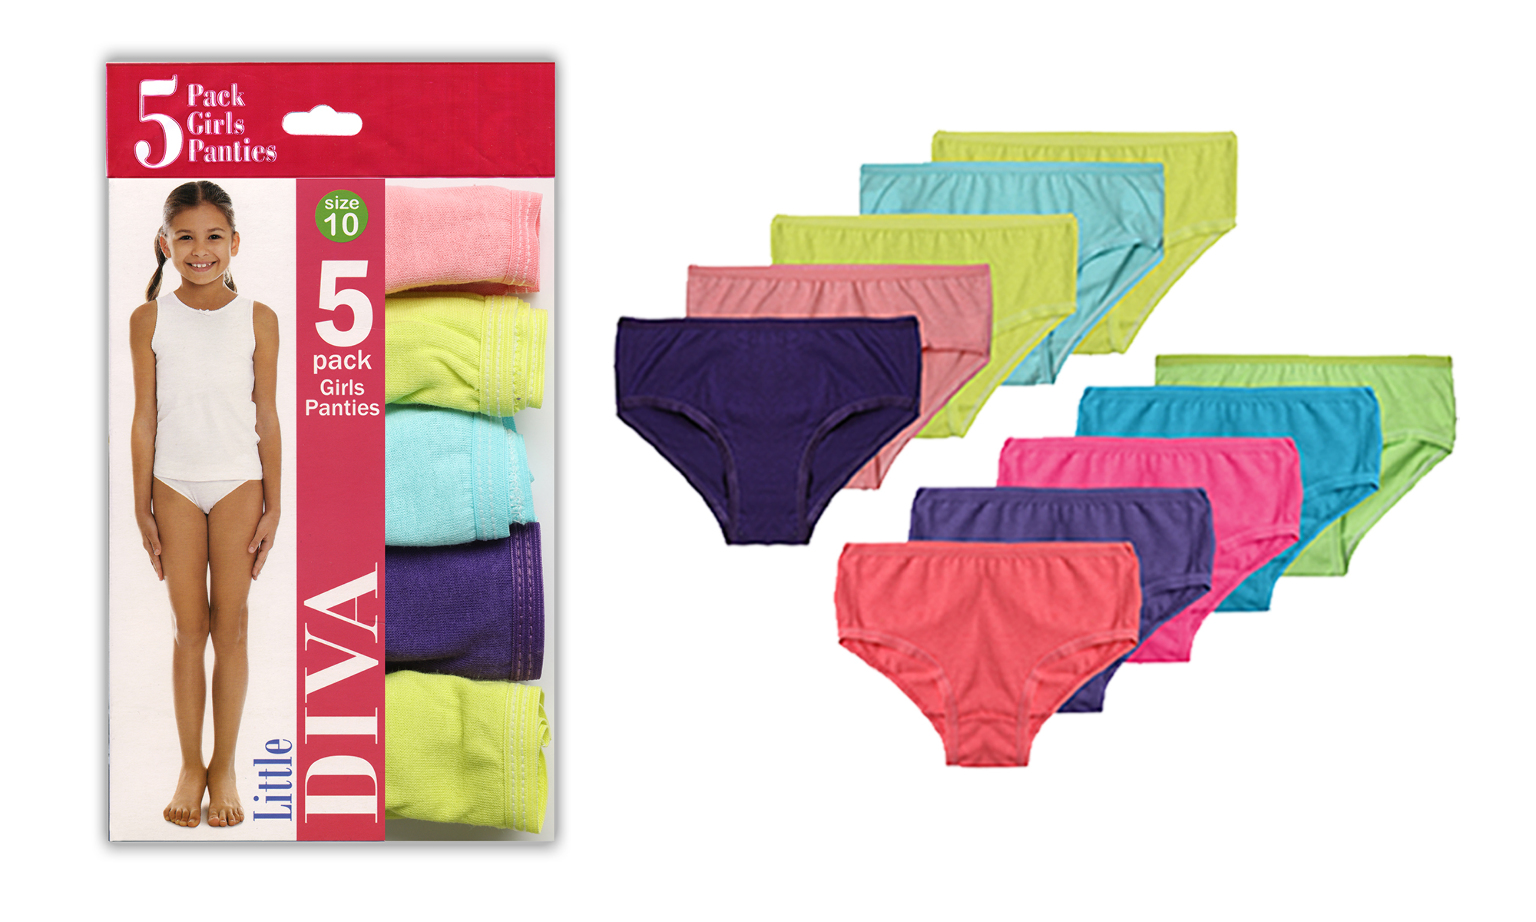  Packs Of 6 Big Girls Panties Underwear Assorted Styles Size 8